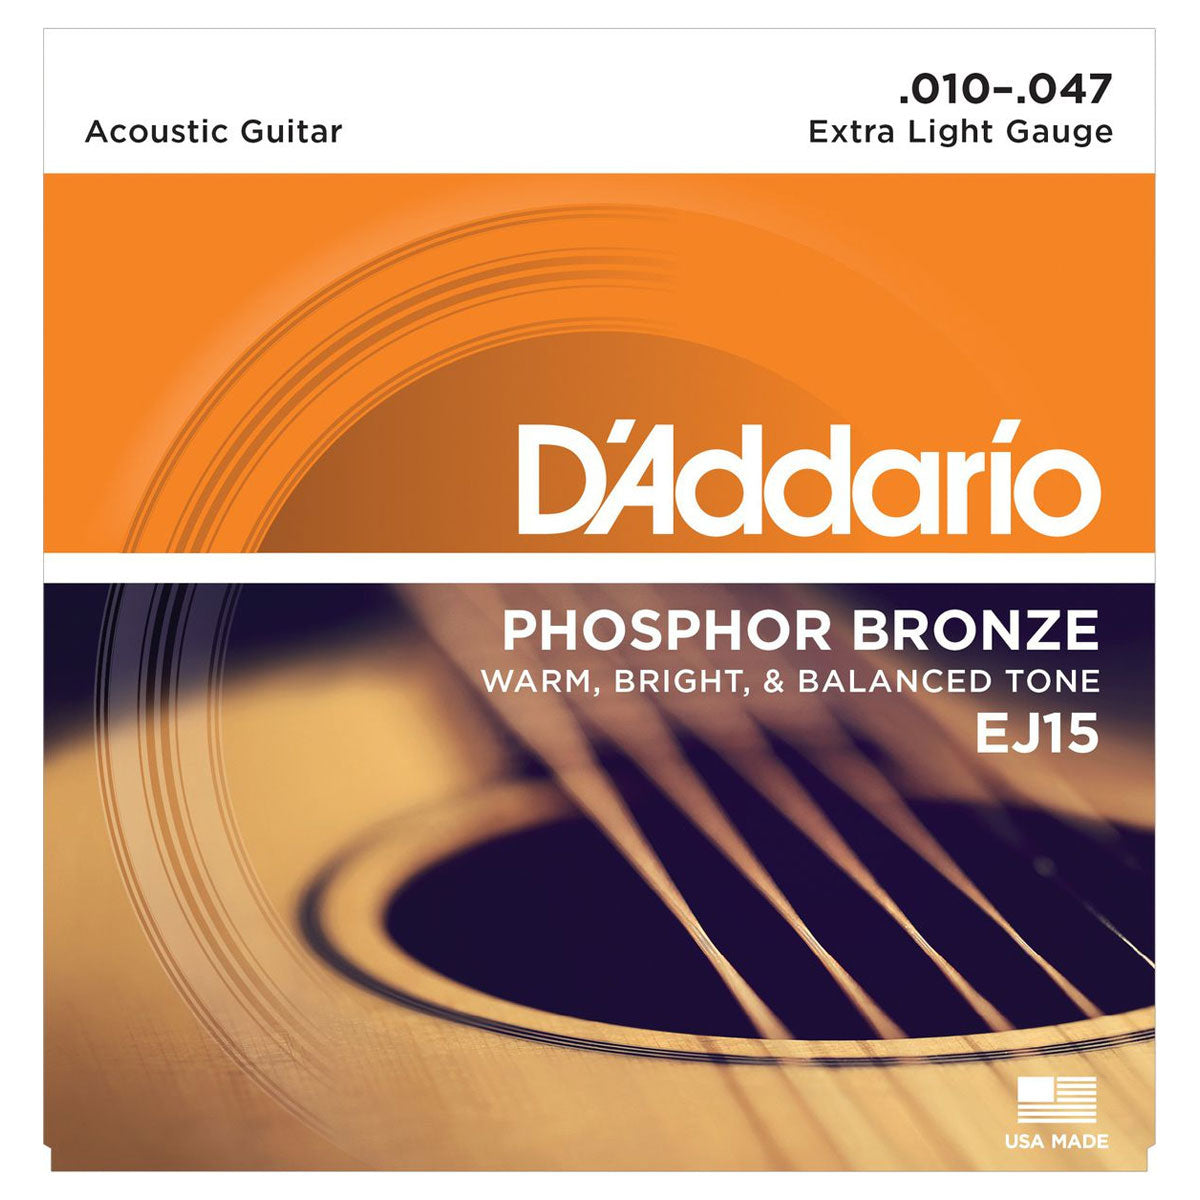 D'Addario EJ15 Phosphor Bronze Round Wound Acoustic Guitar Strings 010-047